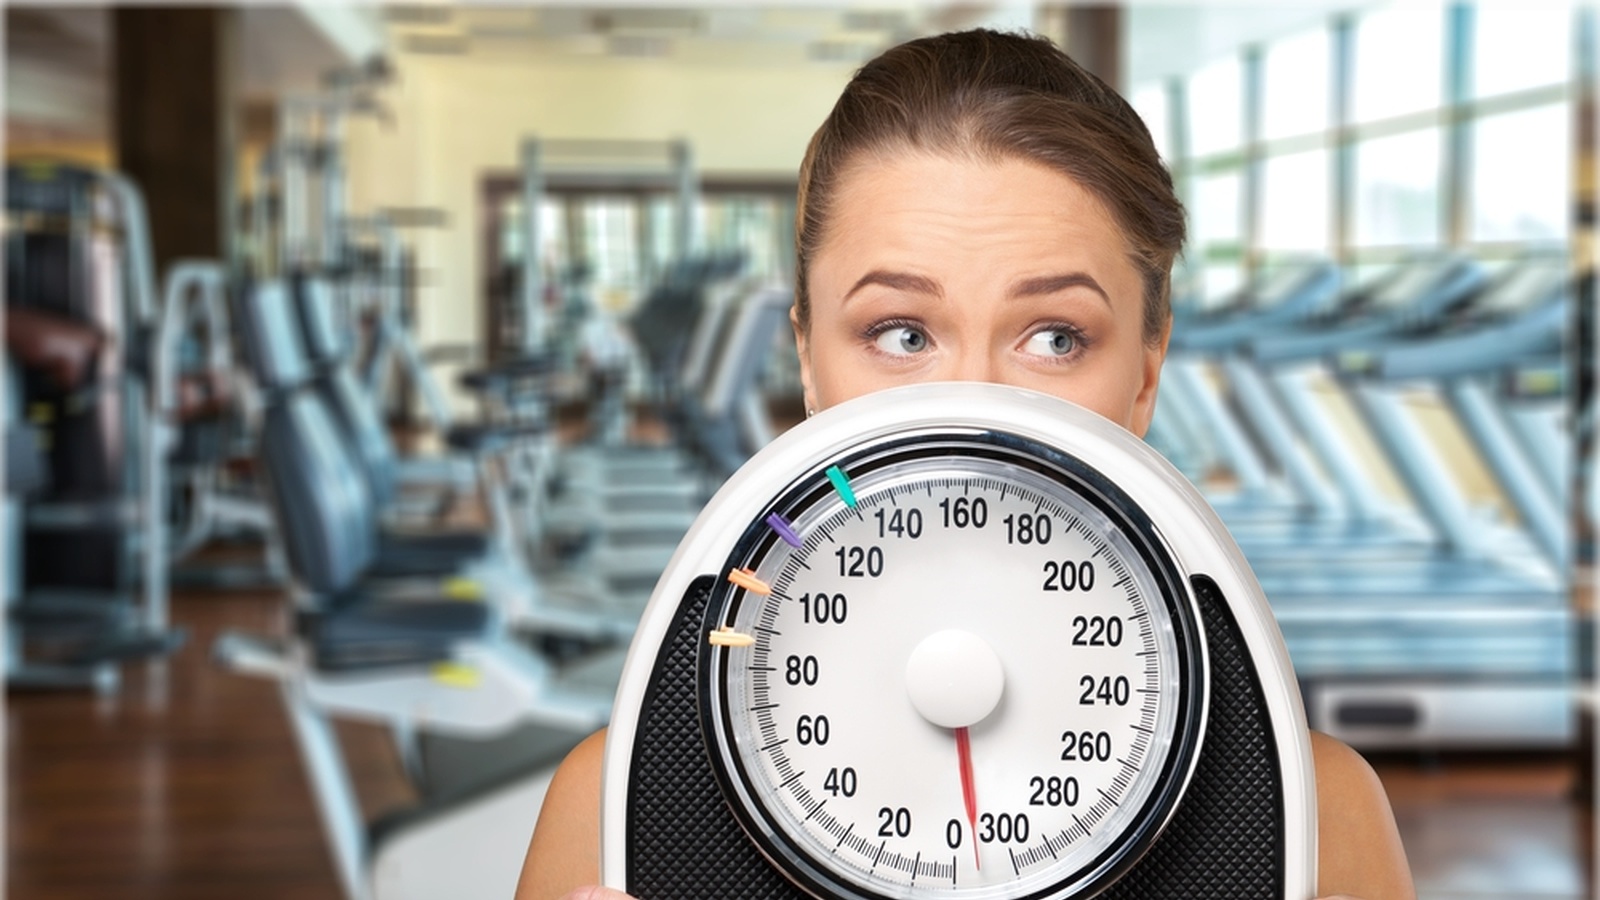 5 Things People Get Wrong When Choosing Weight Loss Programs